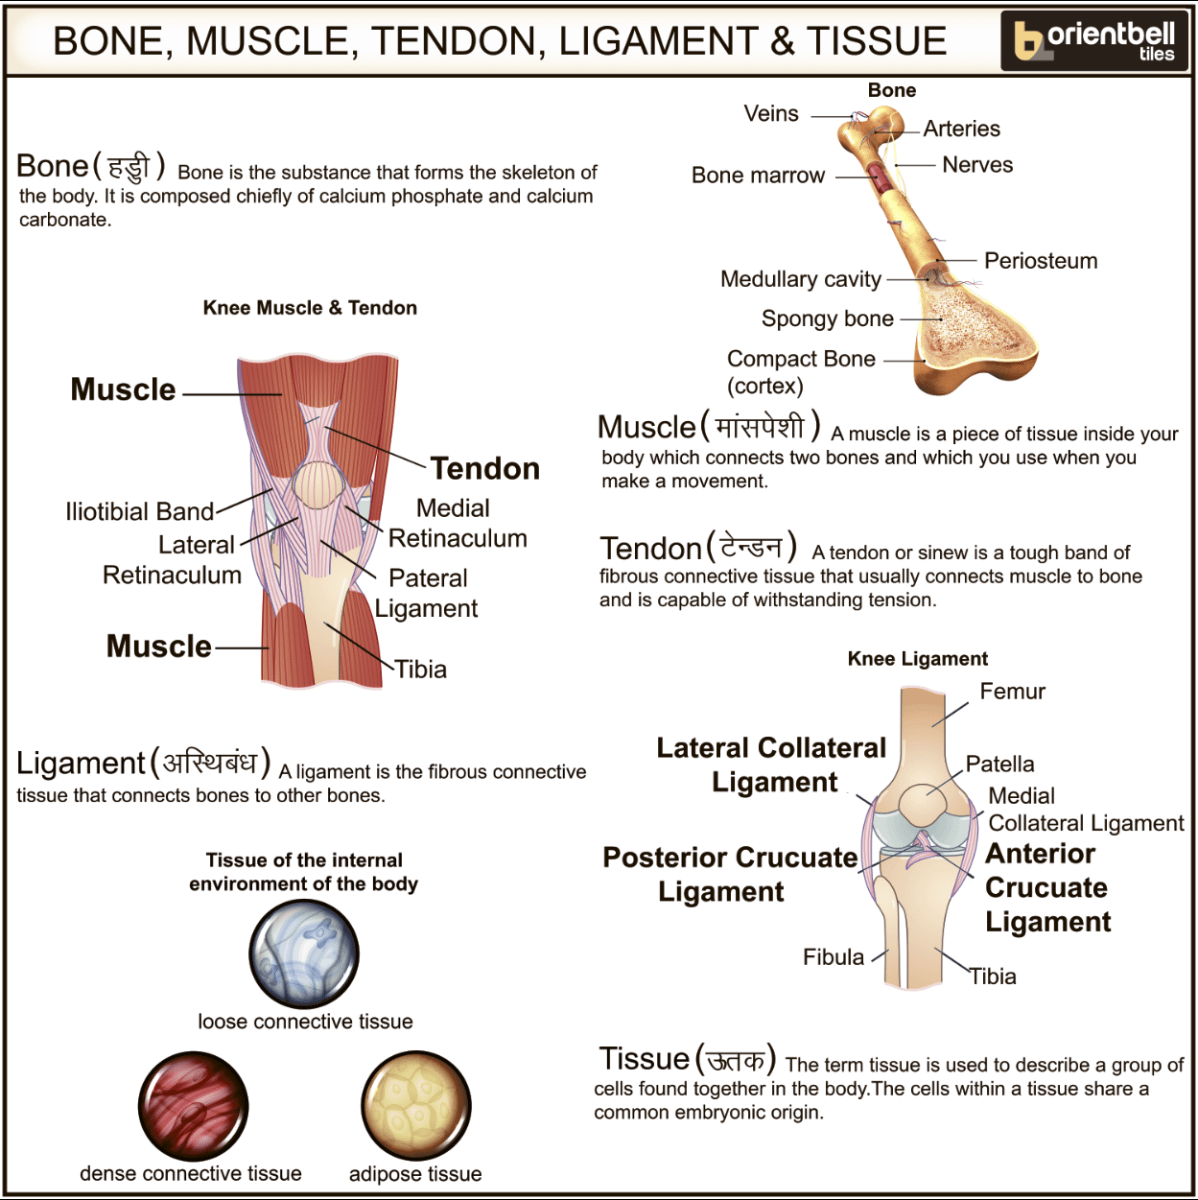 Bone,Muscle,Tendon, Ligament & Tissue